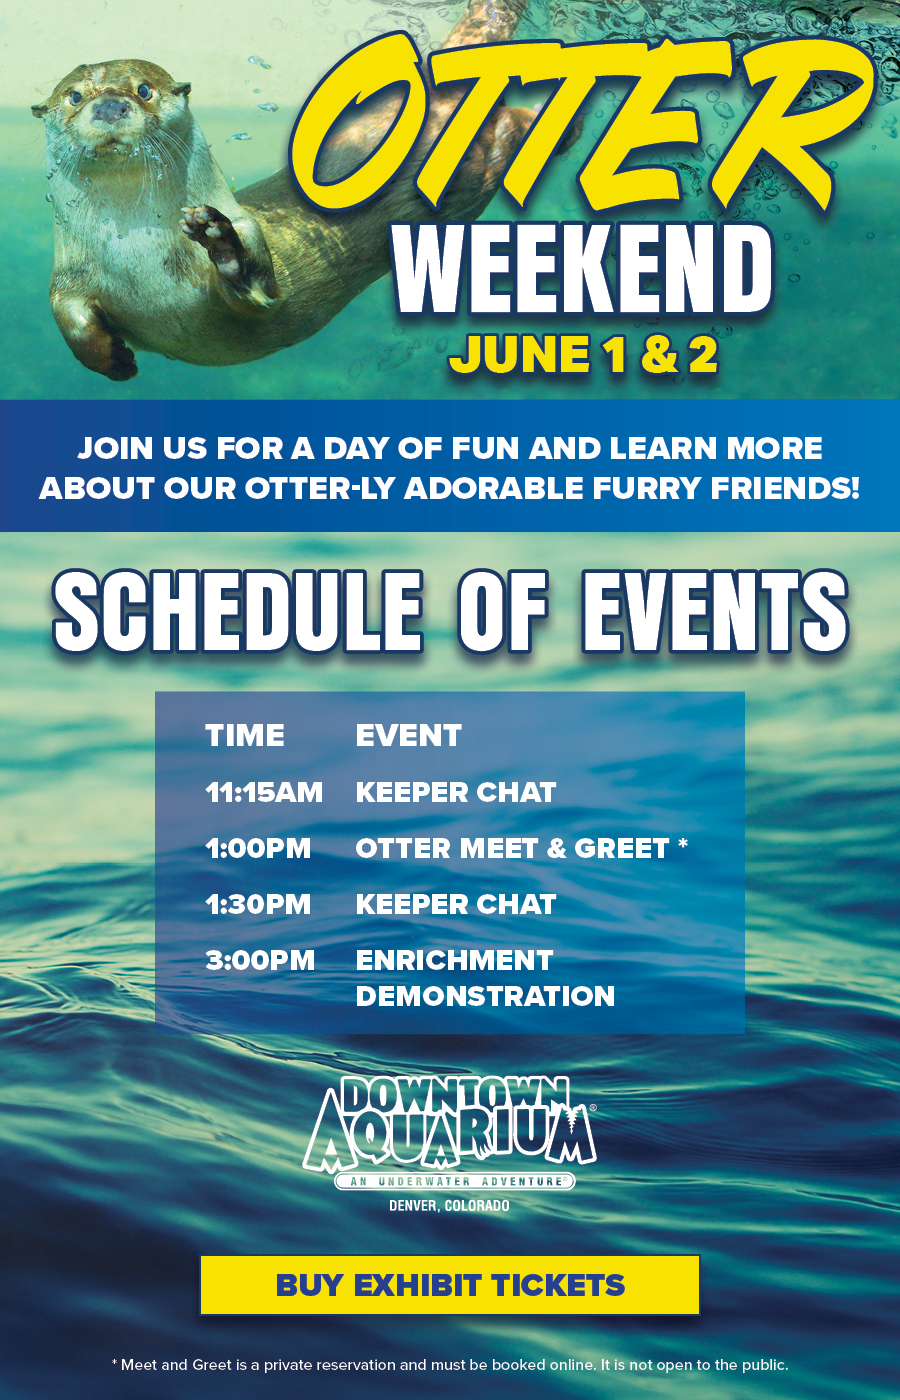 Otter Weekend - The Downtown Aquarium Denver